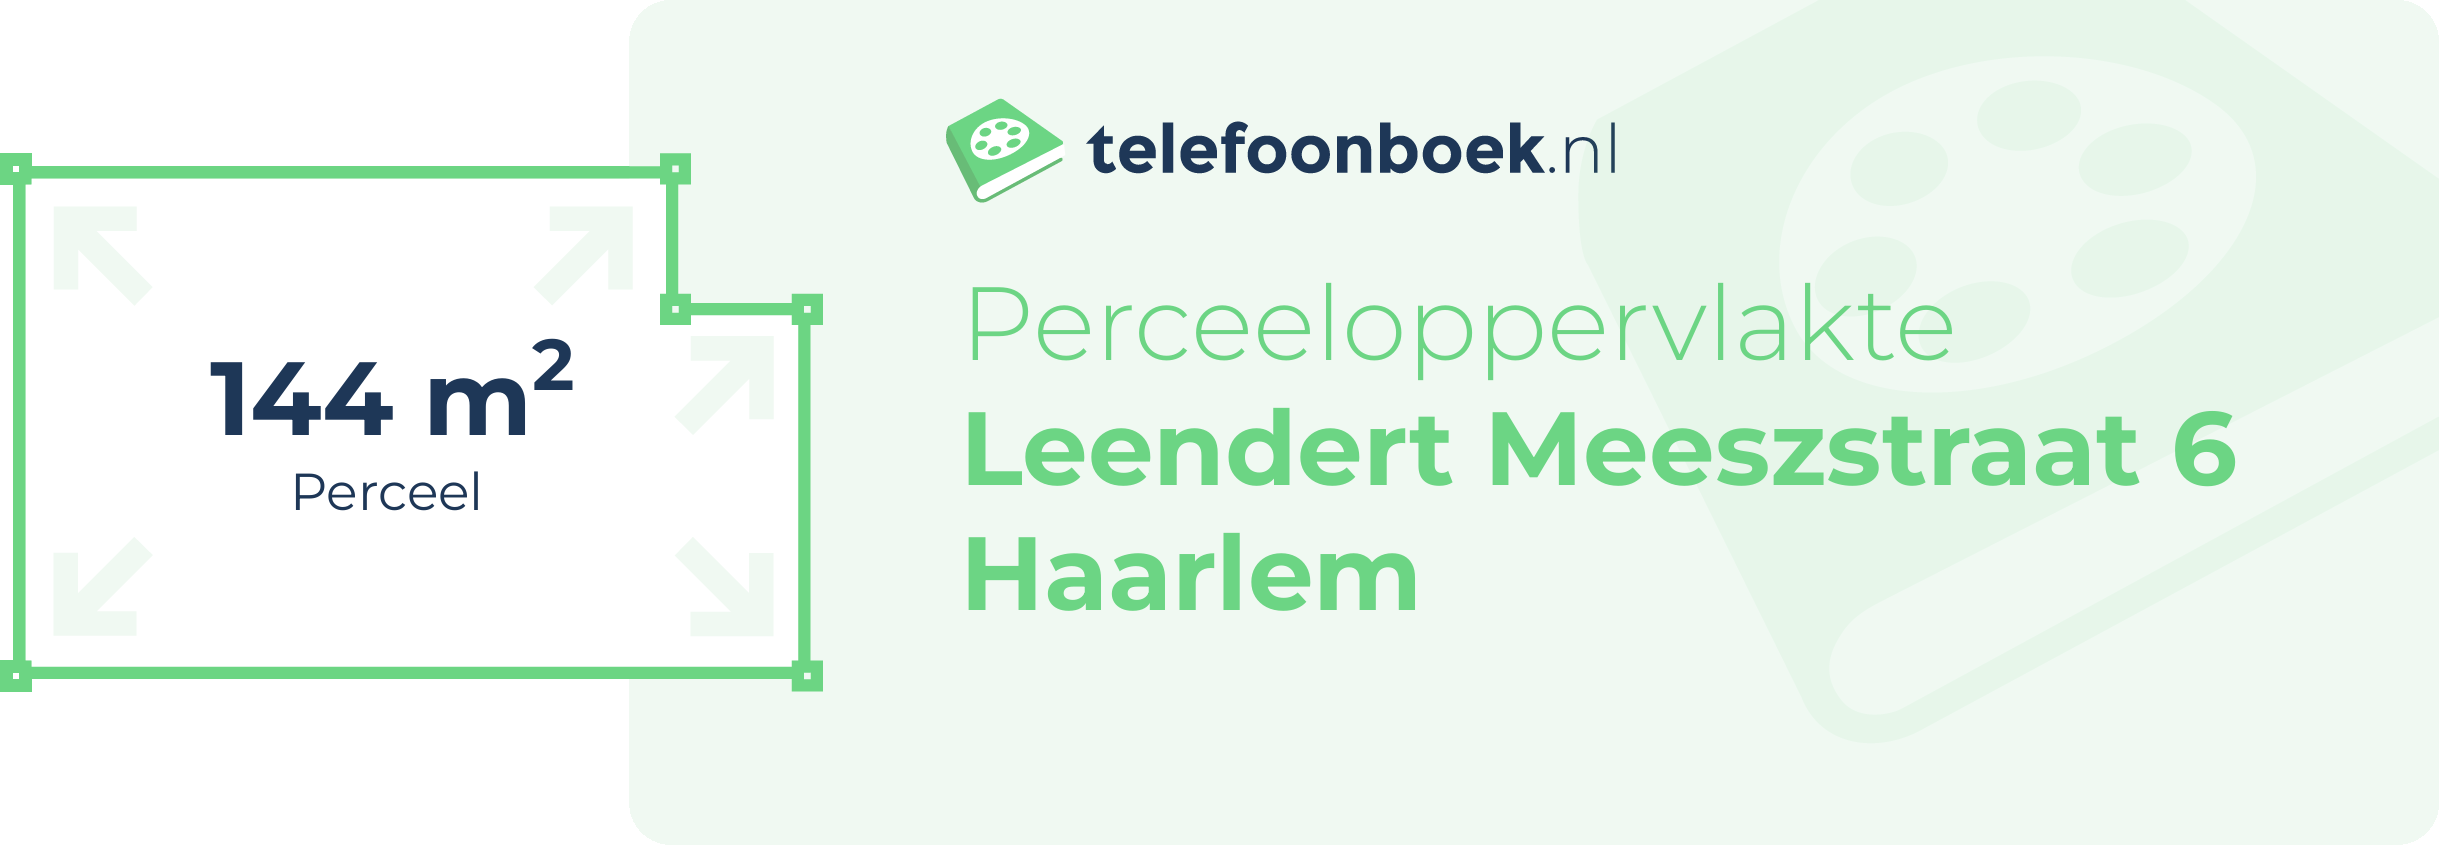 Perceeloppervlakte Leendert Meeszstraat 6 Haarlem